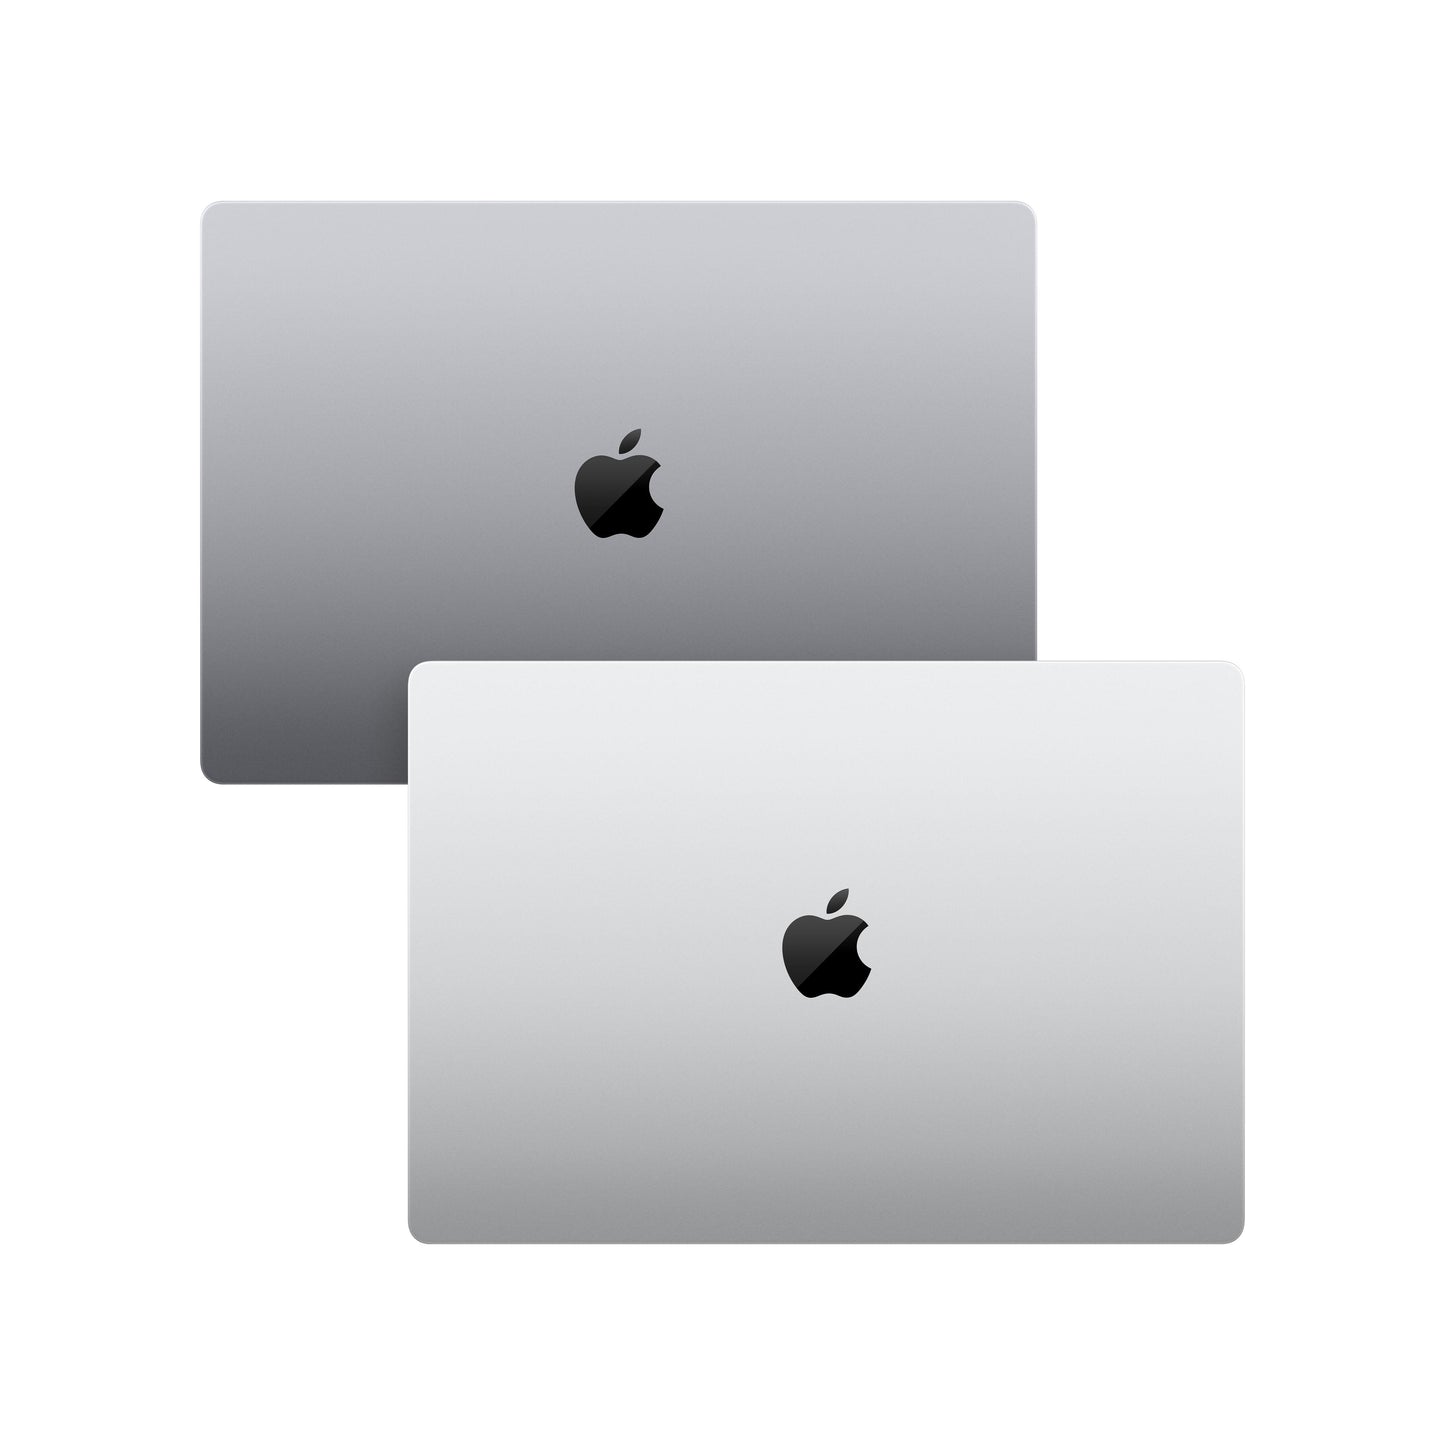 MacBook Pro مقاس 16 انش: شريحة Apple M1 Pro مع وحدة معالجة مركزية 10 نوى و 16 وحدة معالجة رسومات أساسية، 512 جيجابايت SSD - رمادي